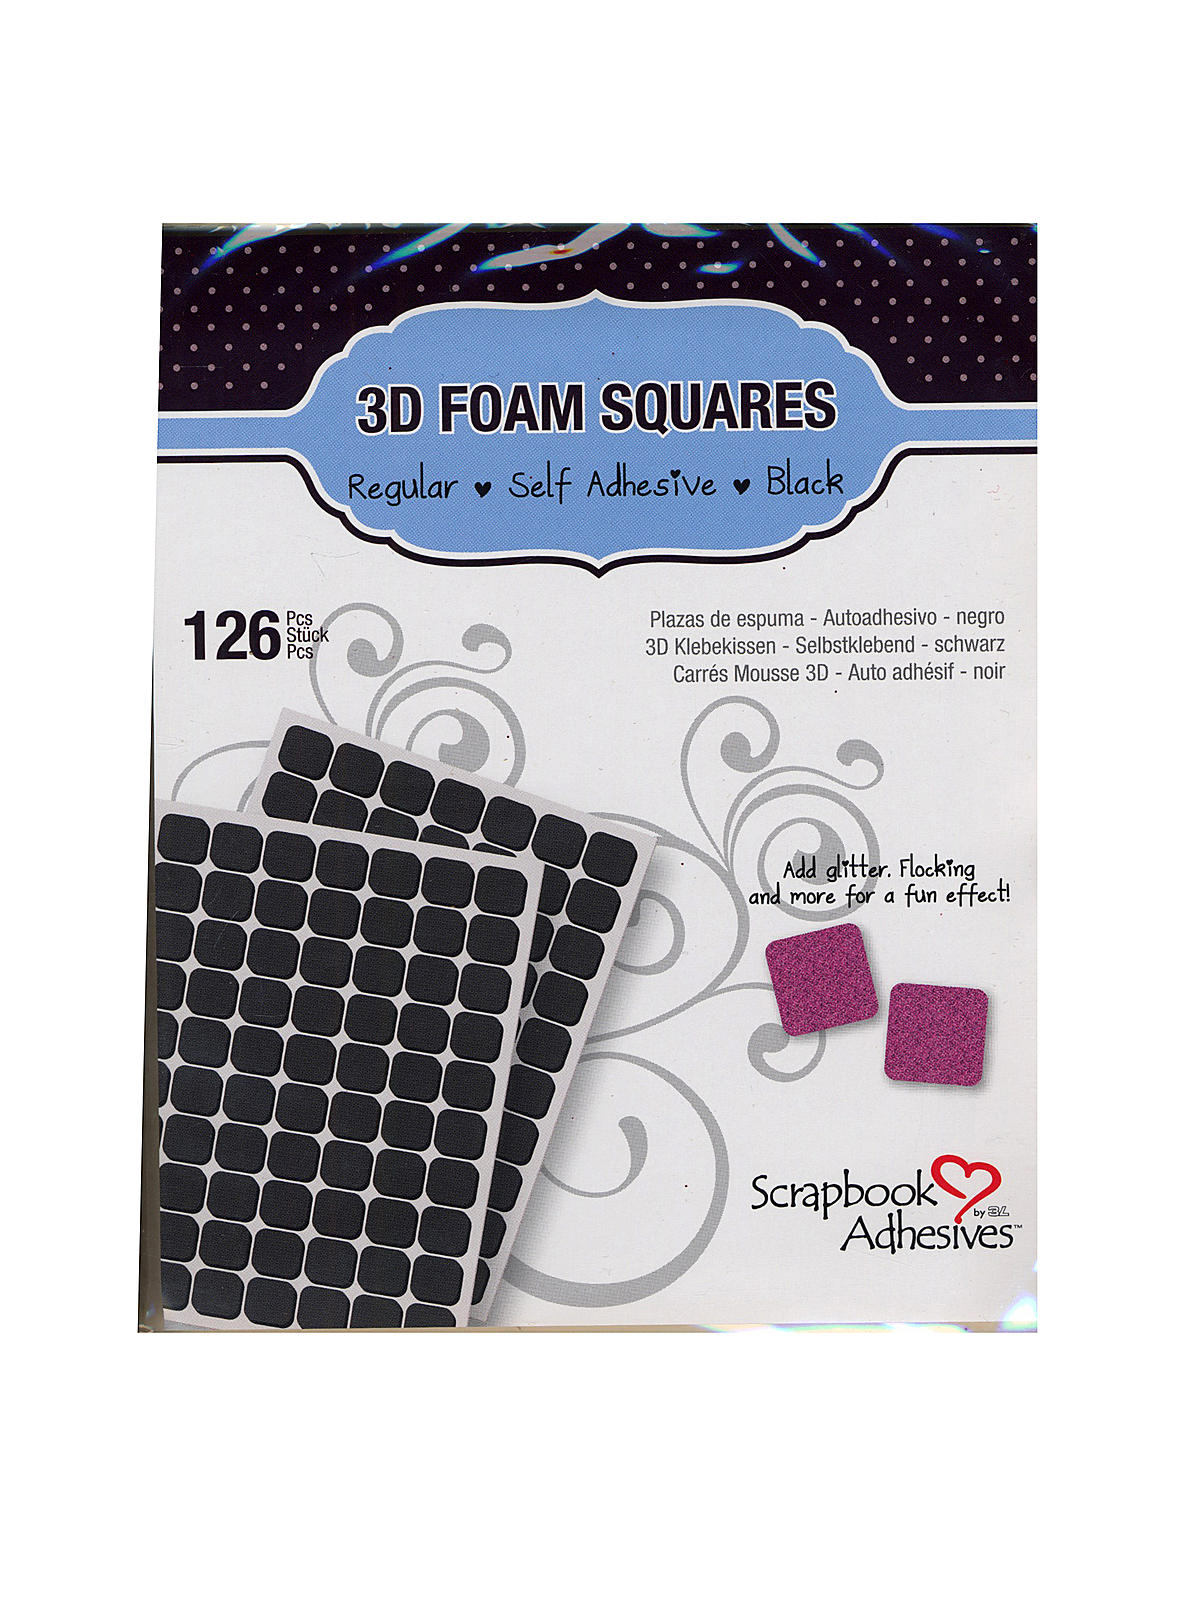 Scrapbook Adhesives 3D Foam Squares